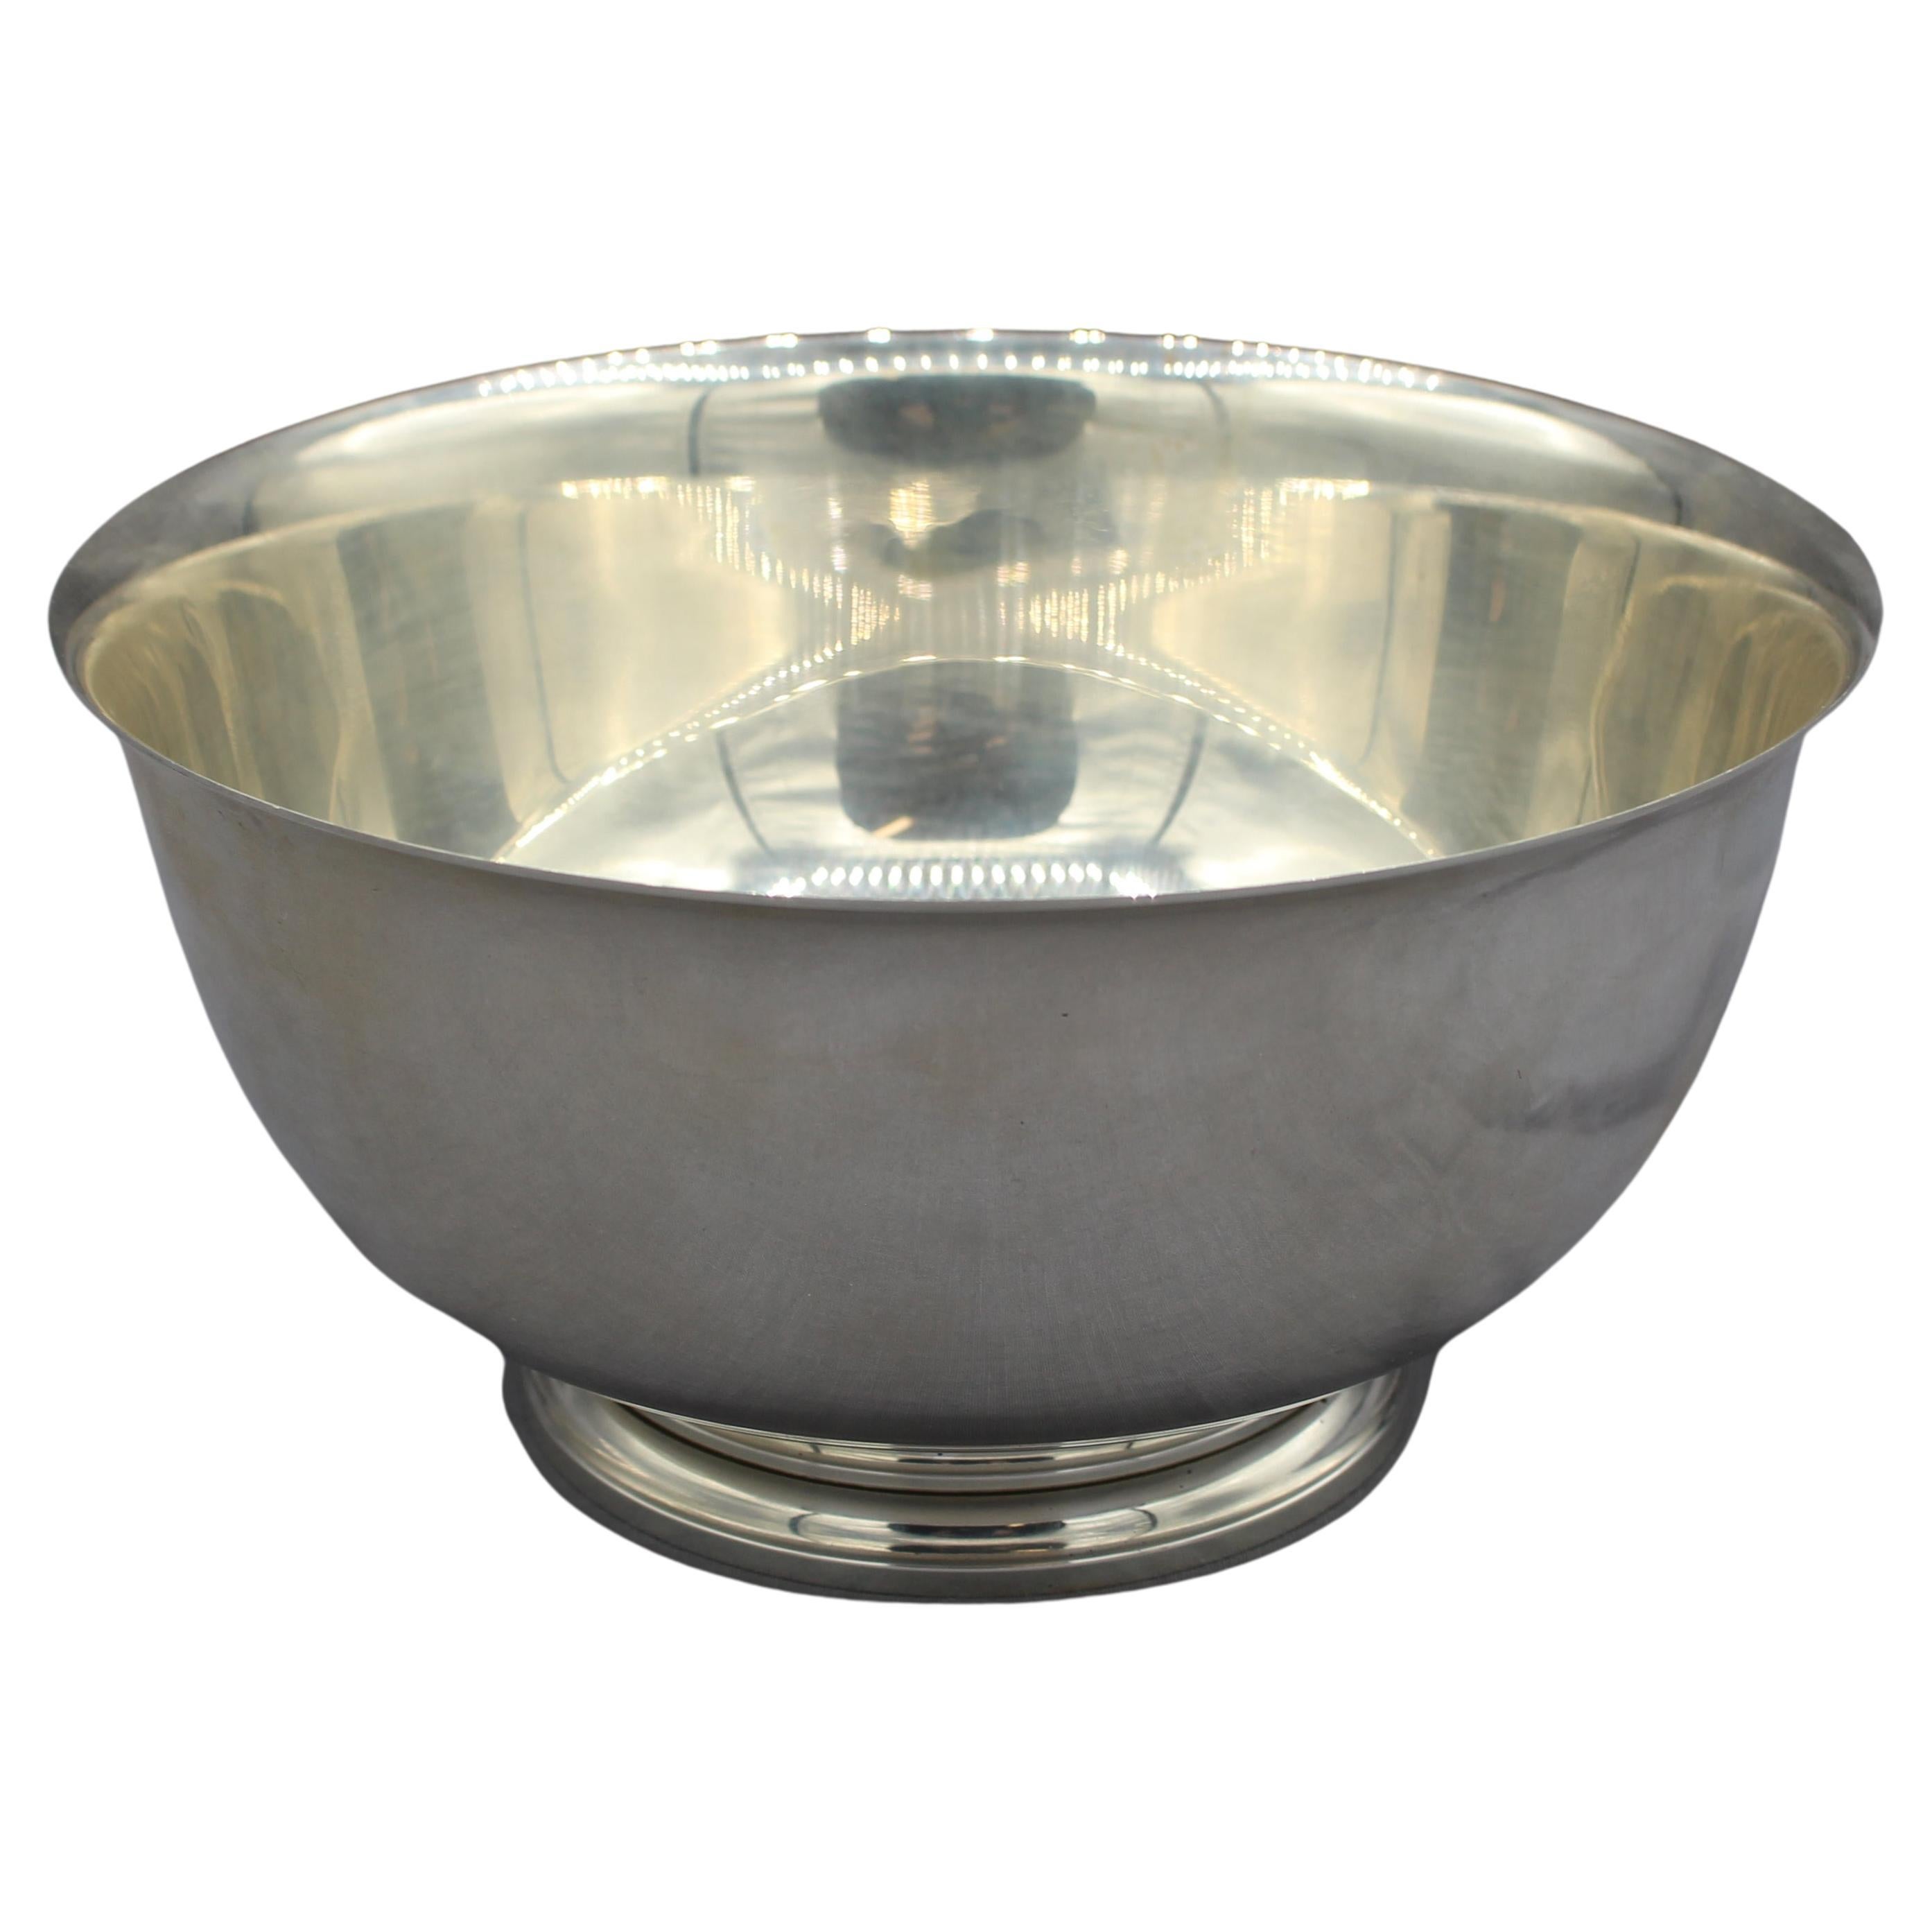 Modernism Sterling Silver Bowl by Tiffany